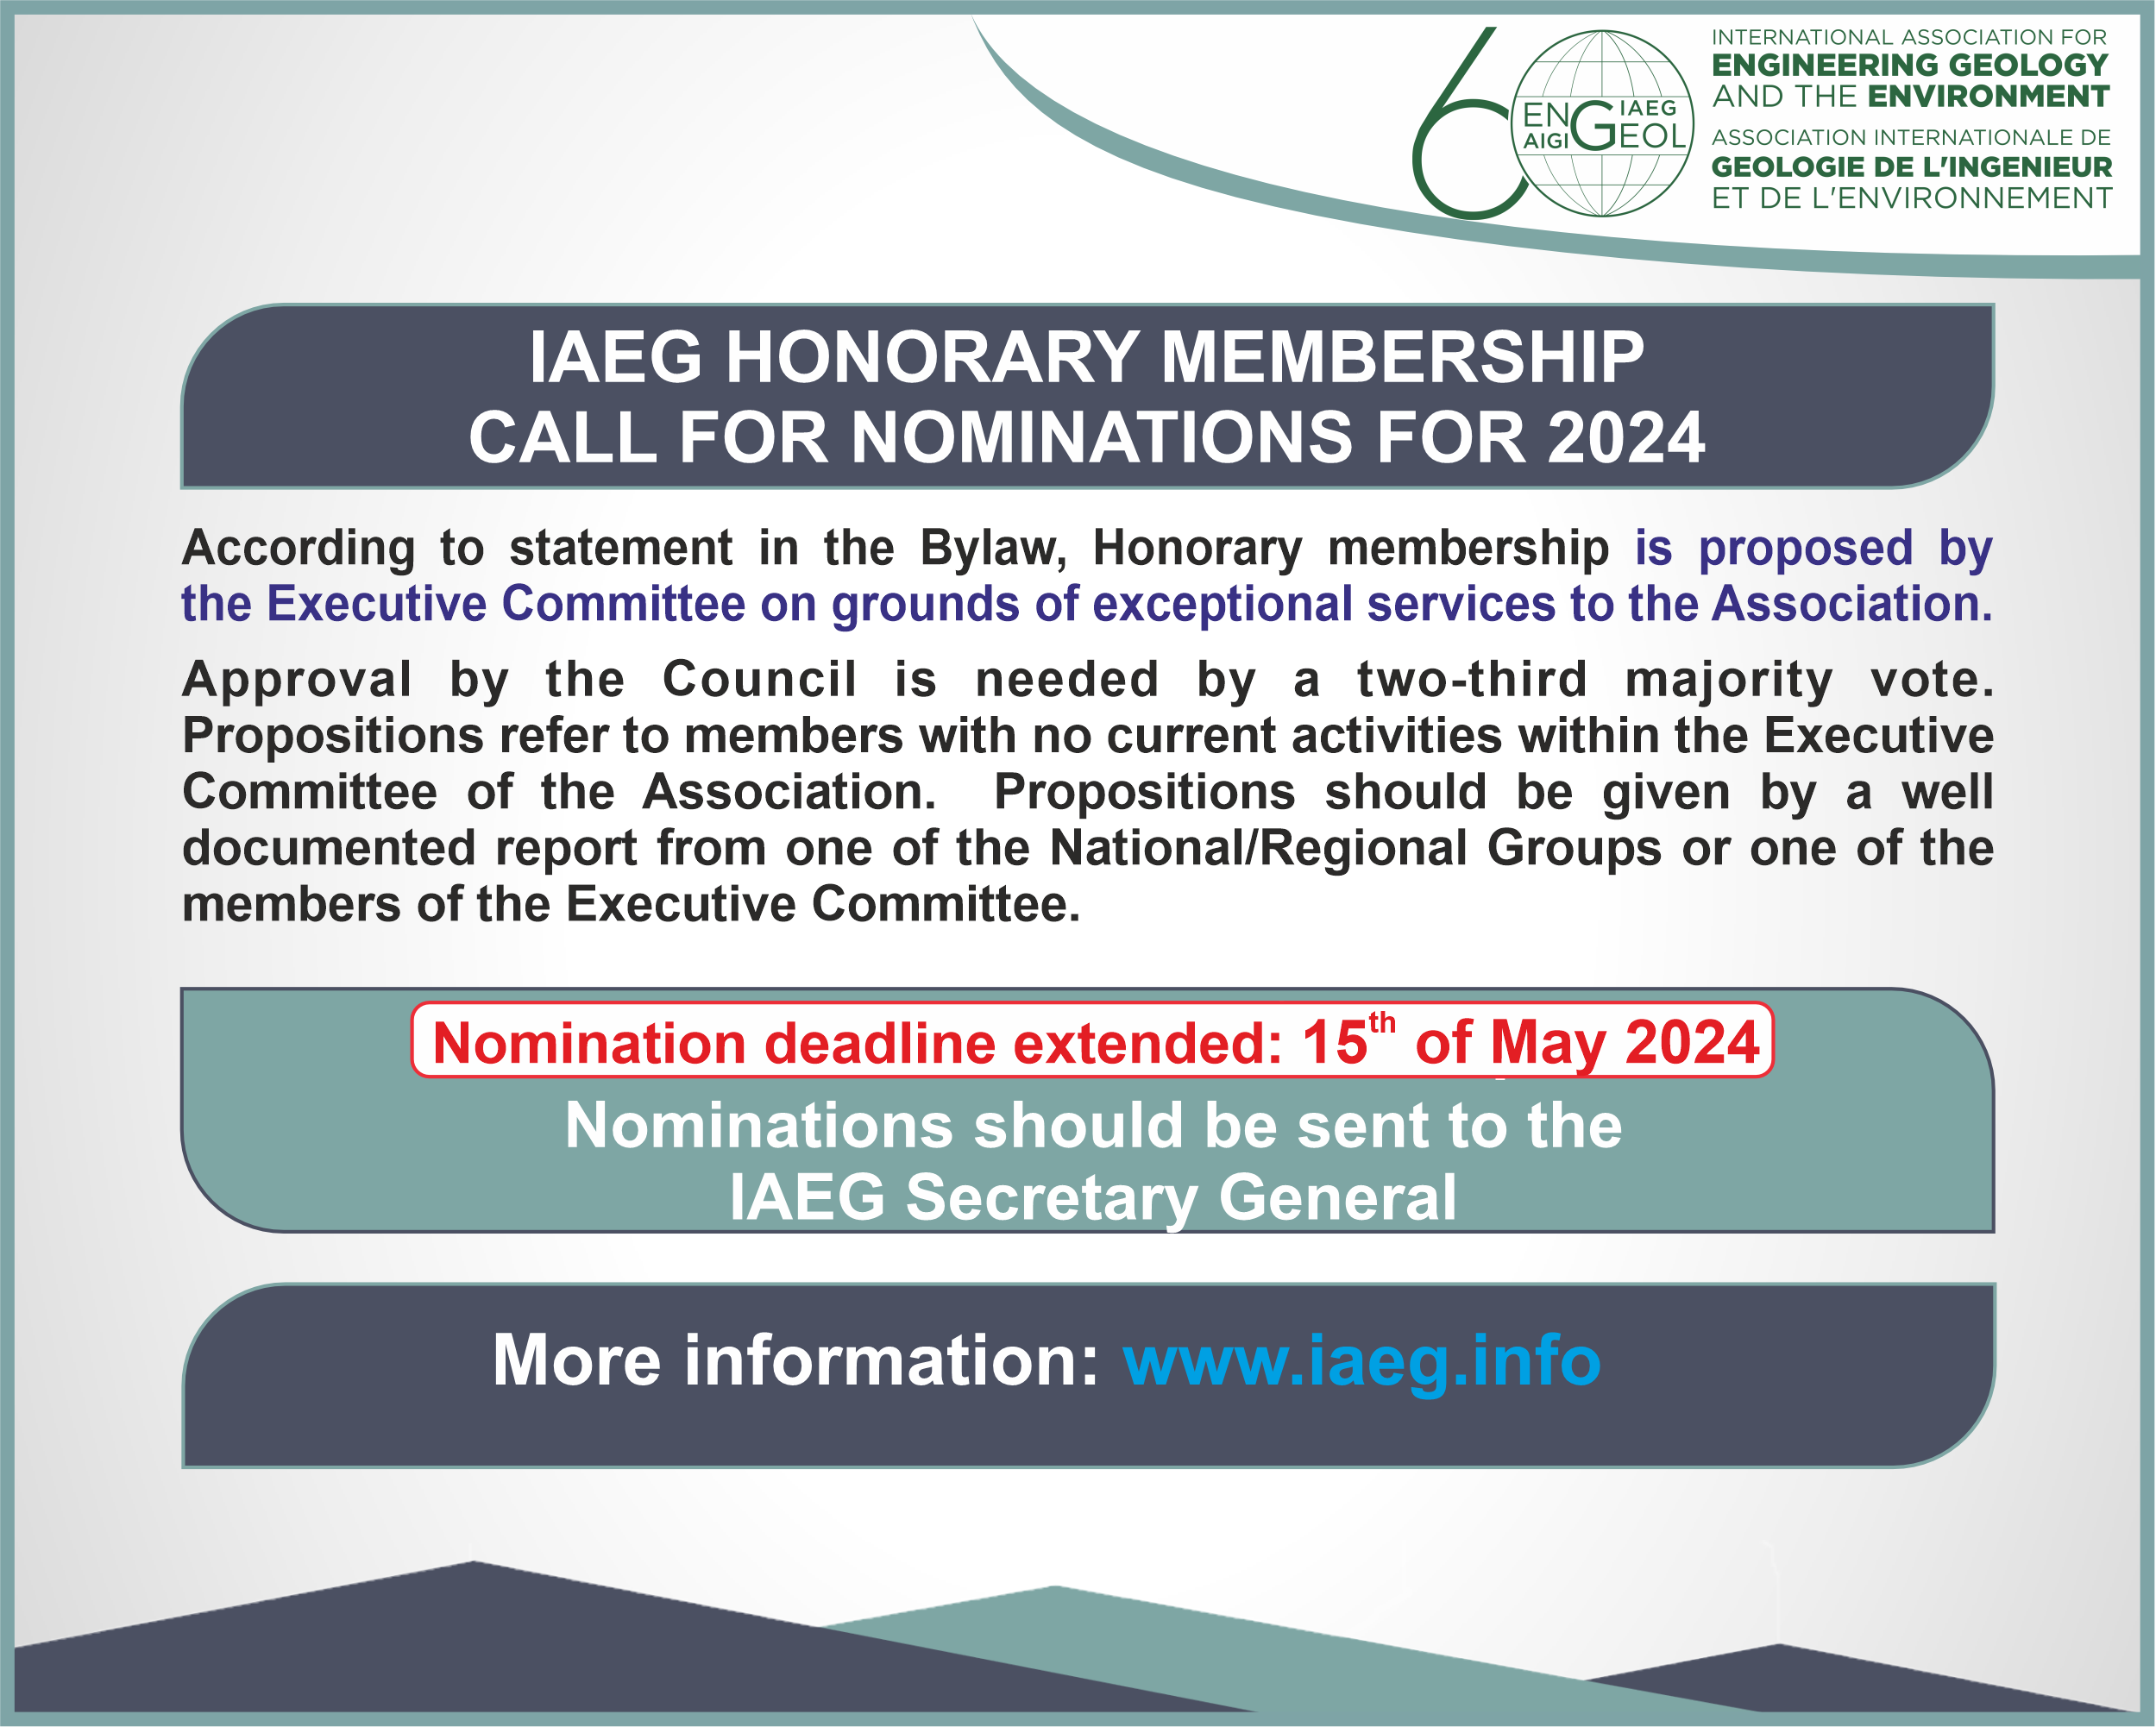 CALL FOR NOMINATIONS OF IAEG HONORARY MEMBERSHIP 2024